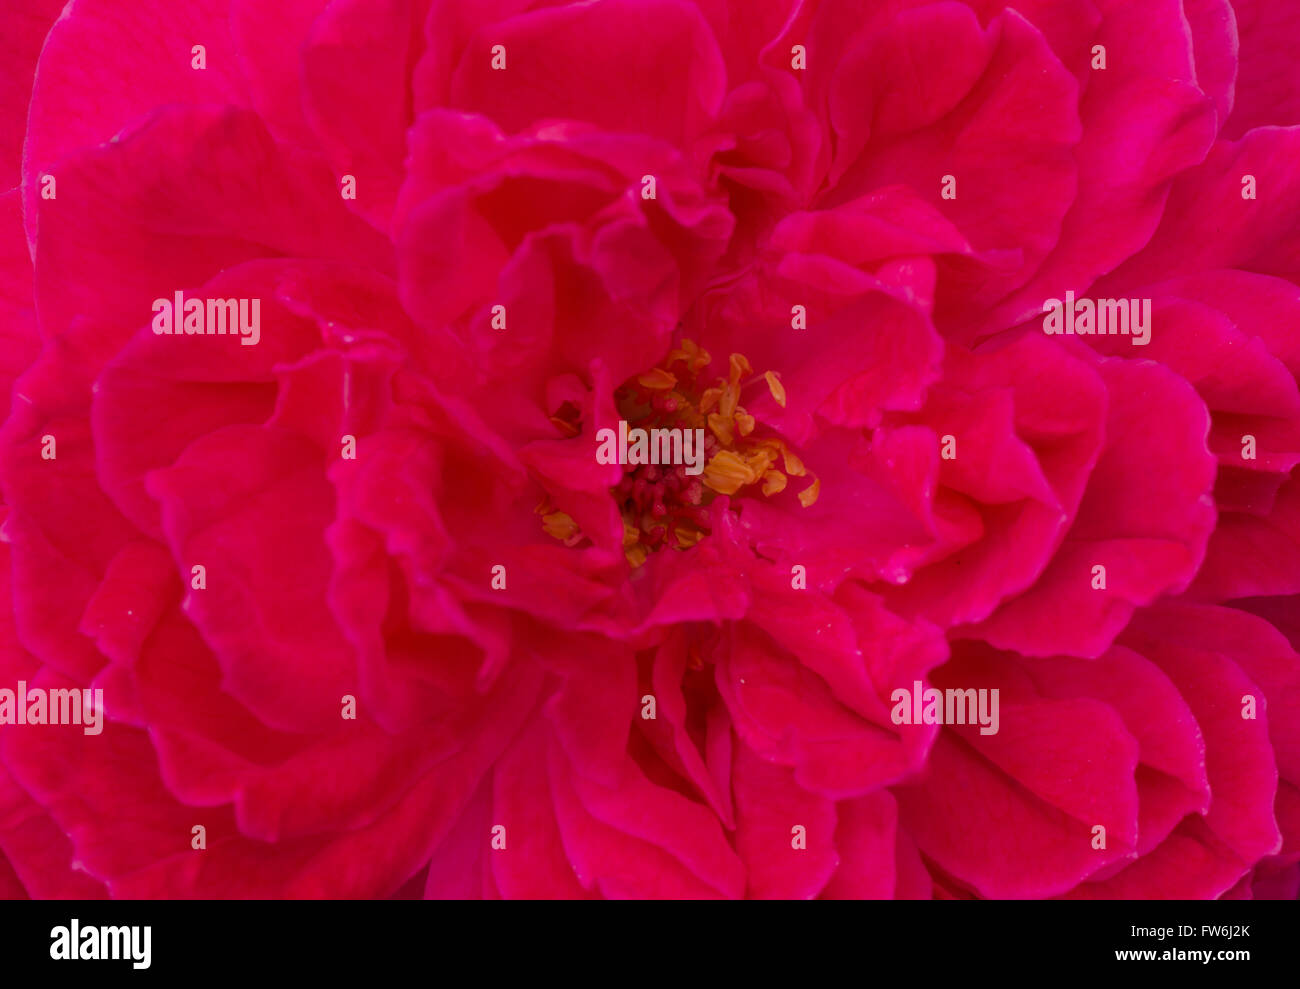 Damask rose petal background Stock Photo